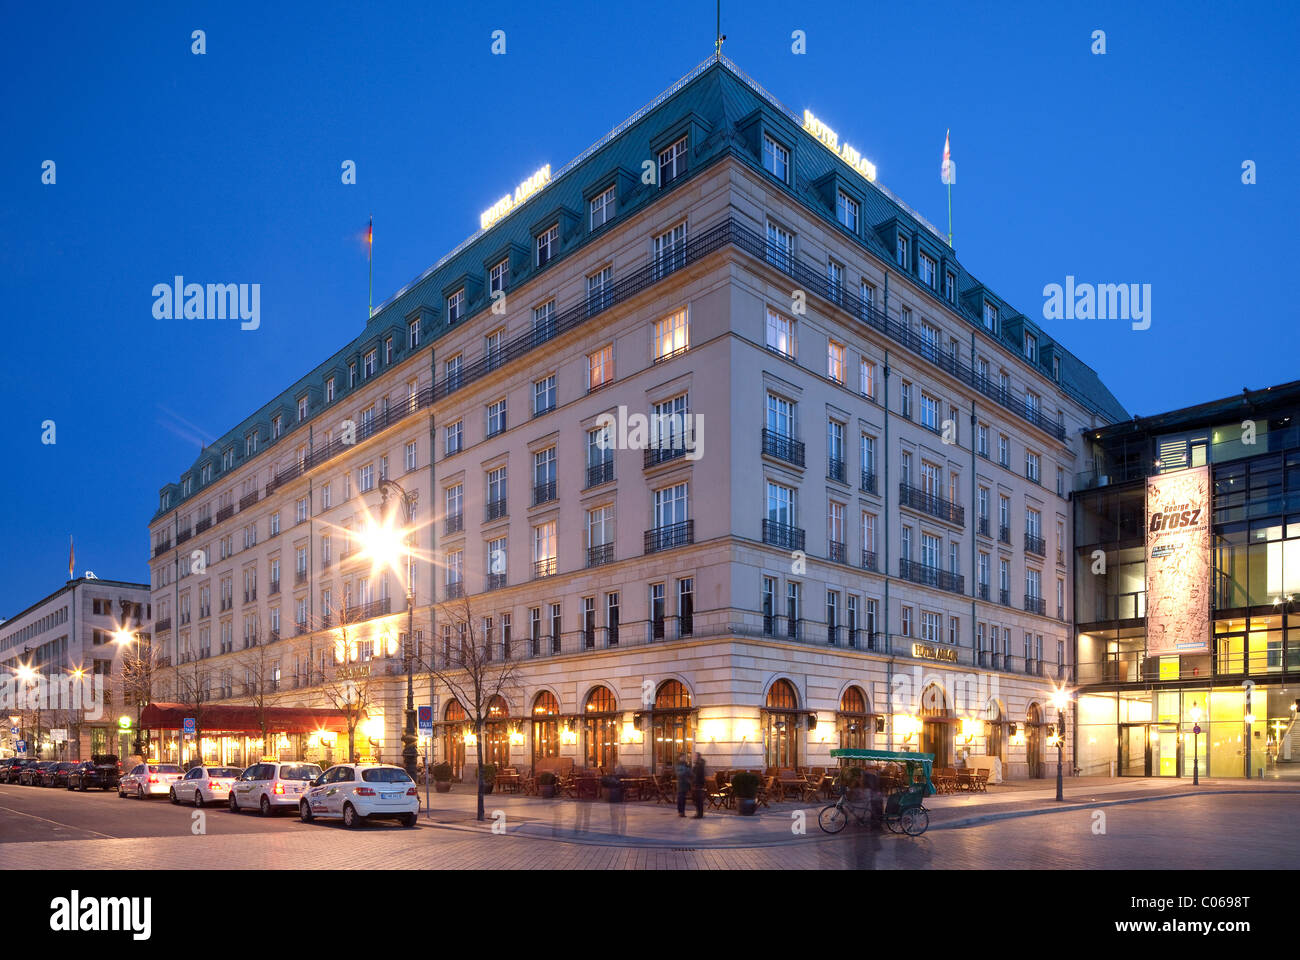 Hotel Adlon, Pariser Platz square, Berlin-Mitte, Berlin, Germany, Europe Stock Photo